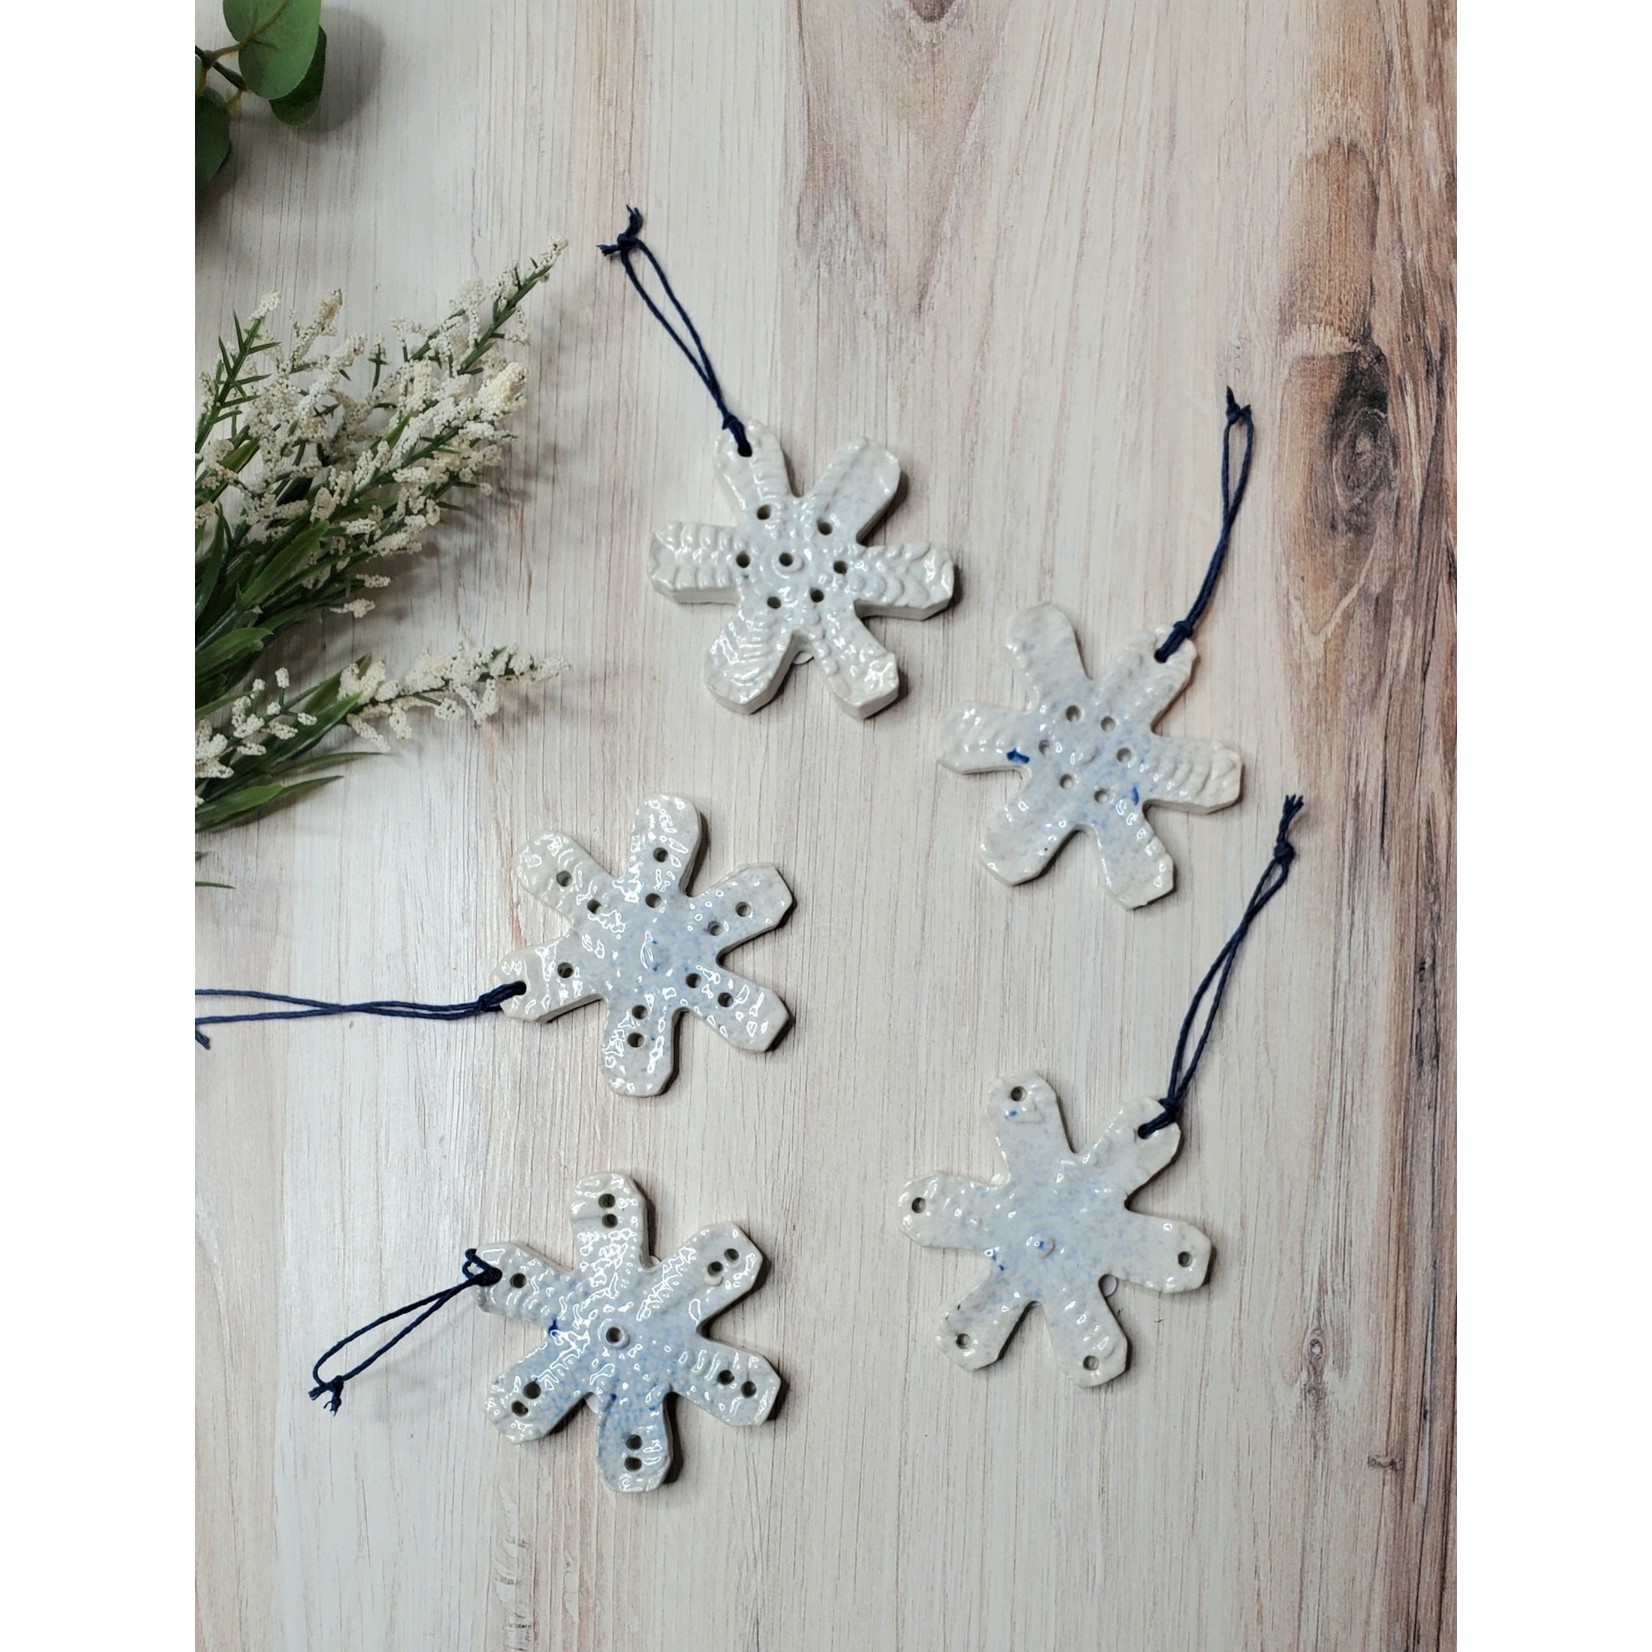 Elaine Randall "Let it Snow"  - Ceramic Snowflake Ornaments